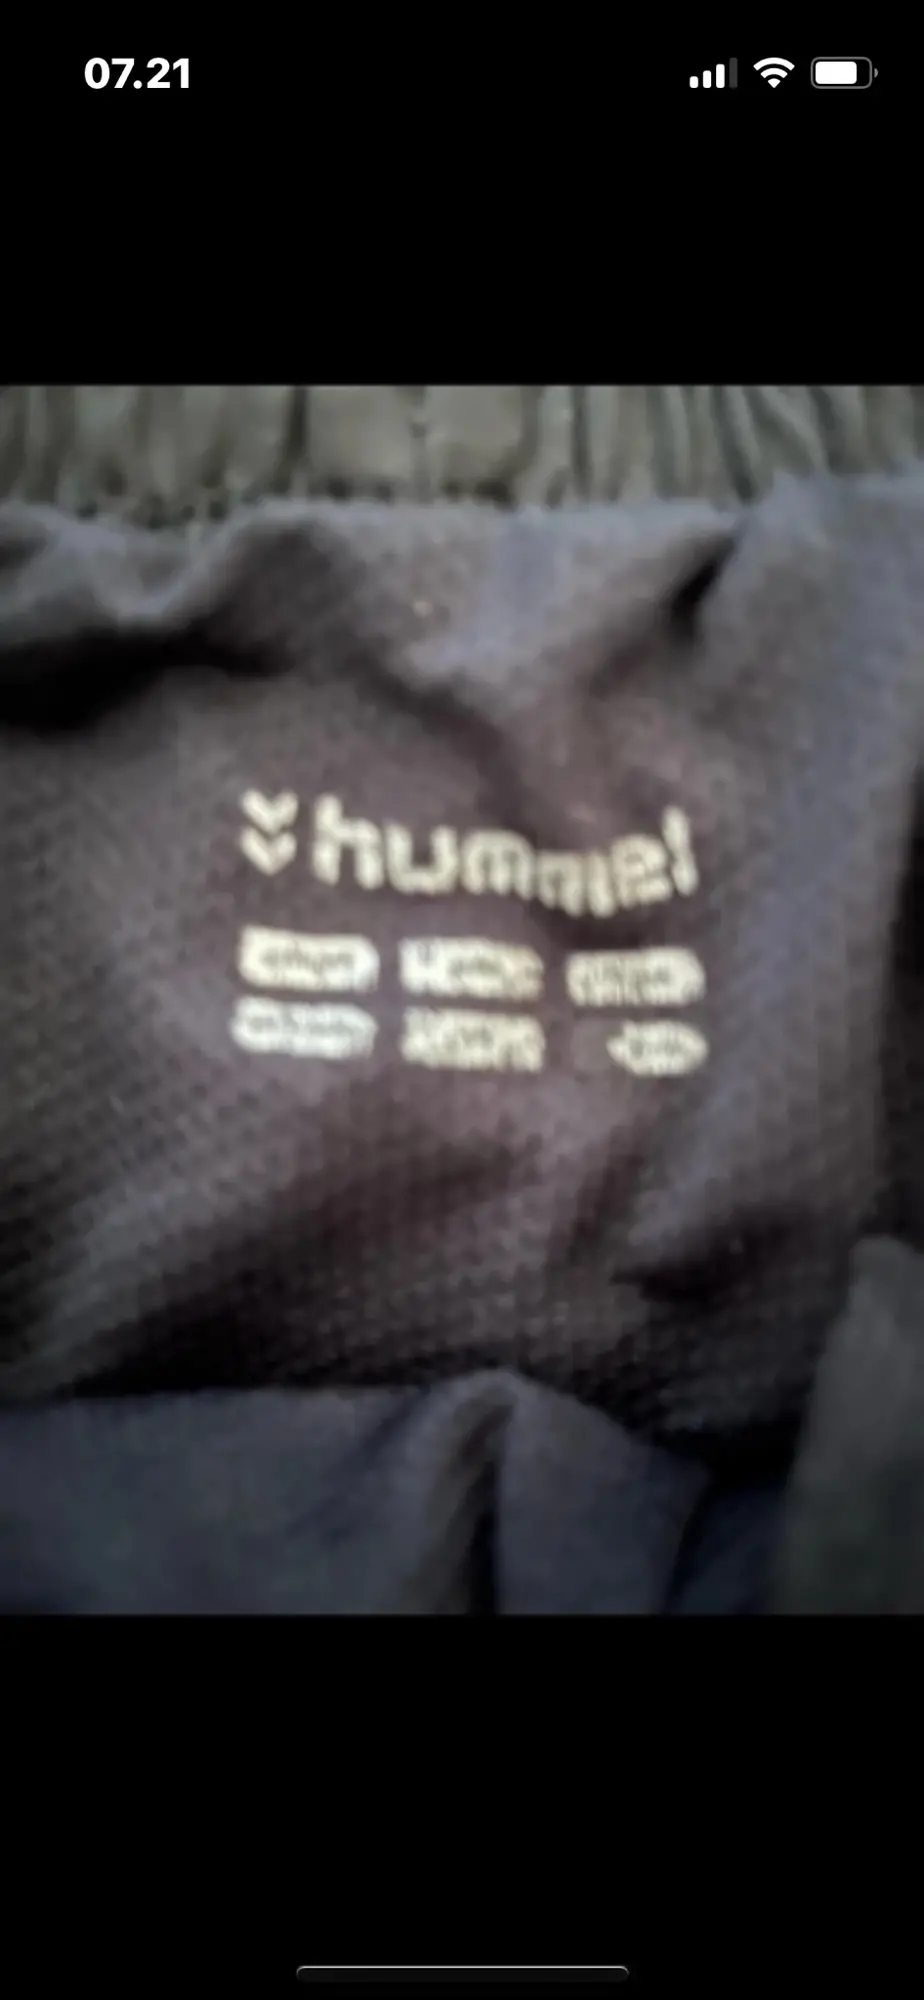 Hummel Sport shorts